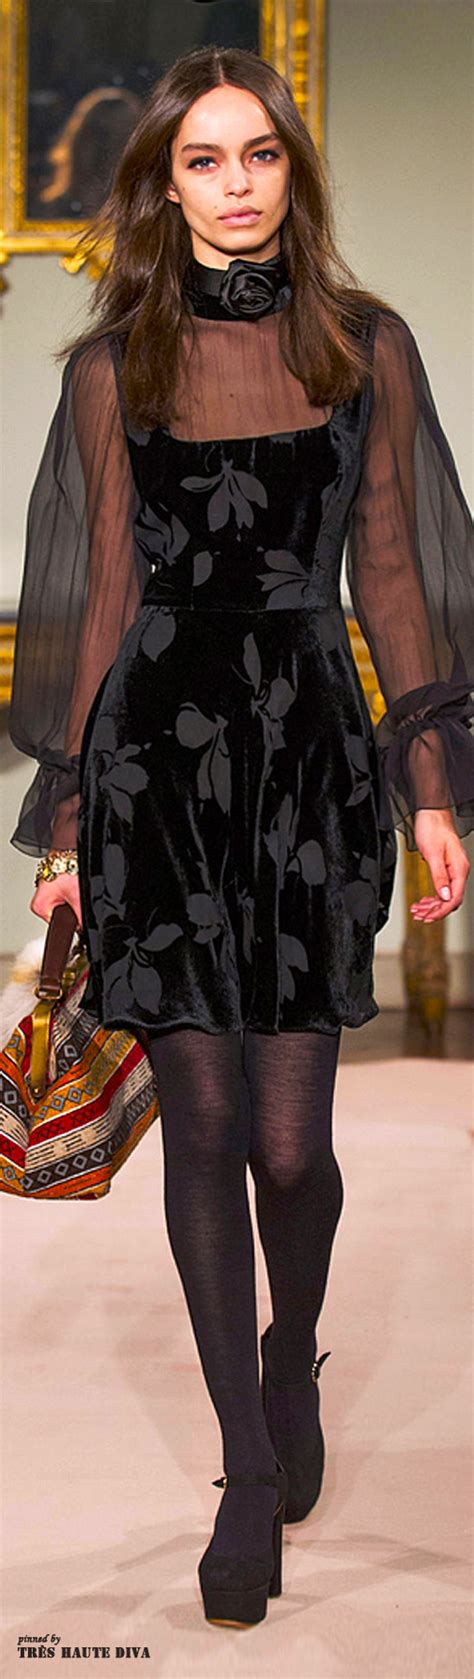 A Woman Walking Down A Runway In A Black Dress